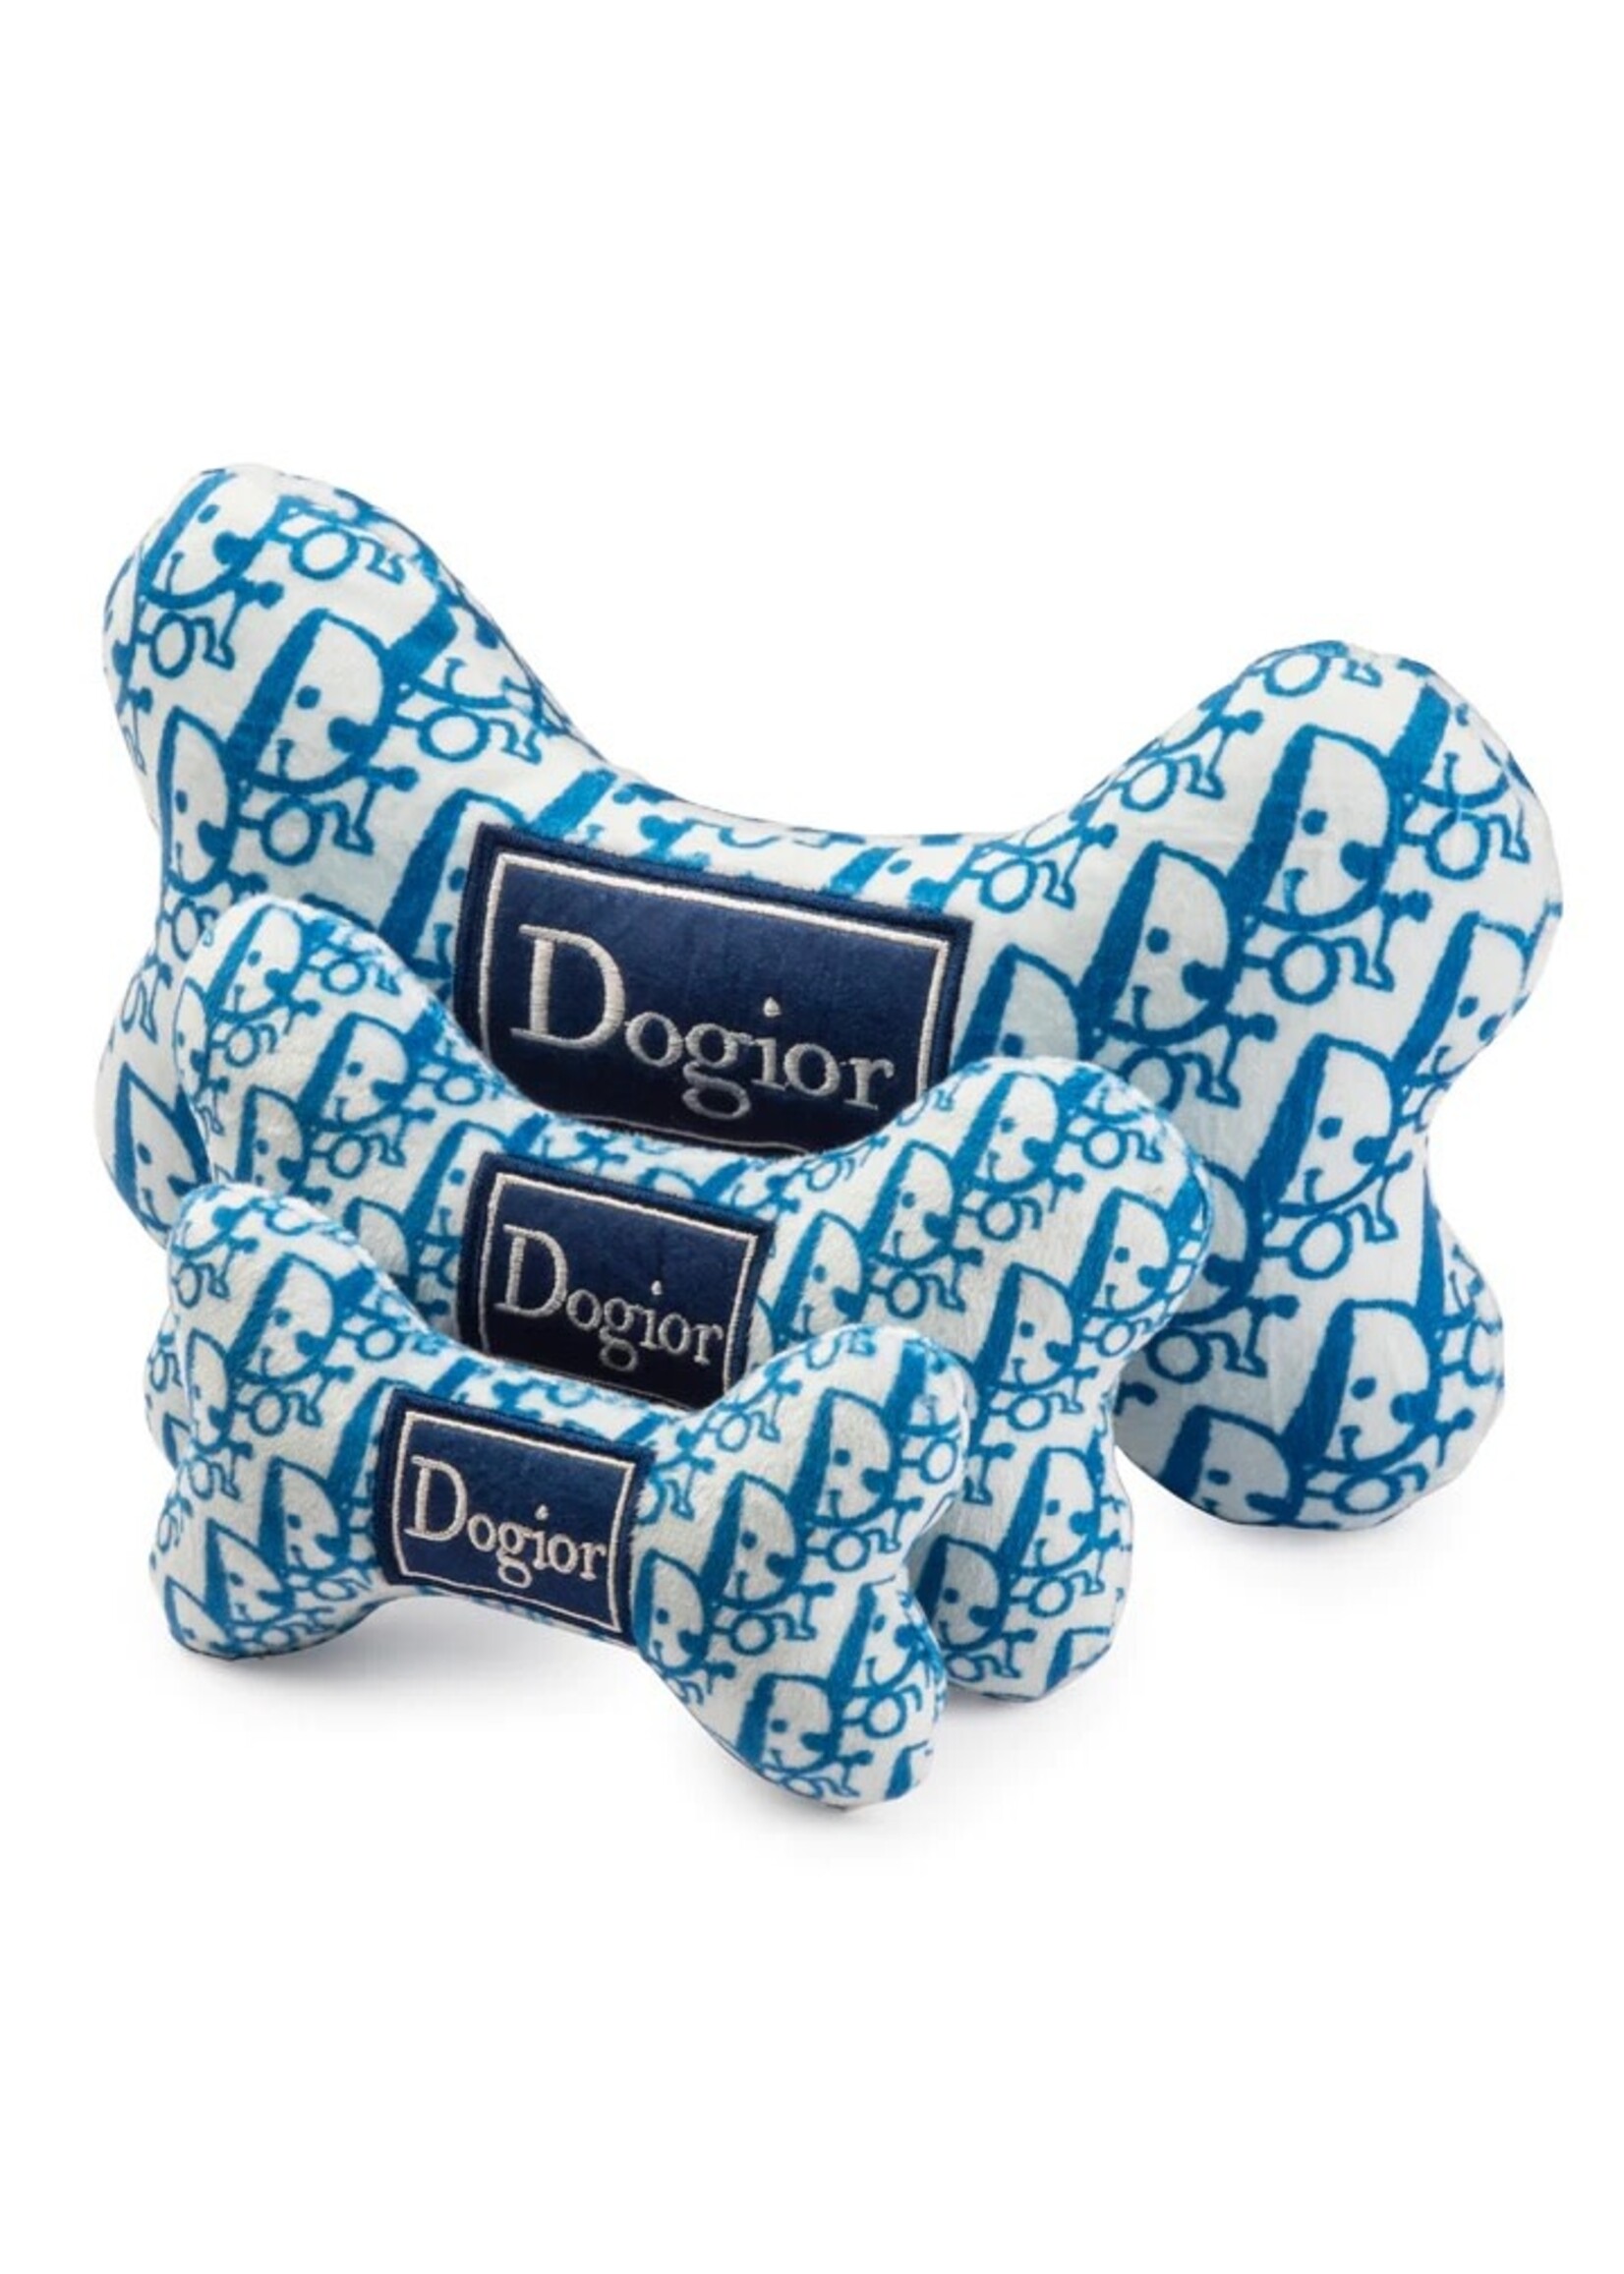 Haute Diggity Dog Dogior Bones Dog Toys | Small